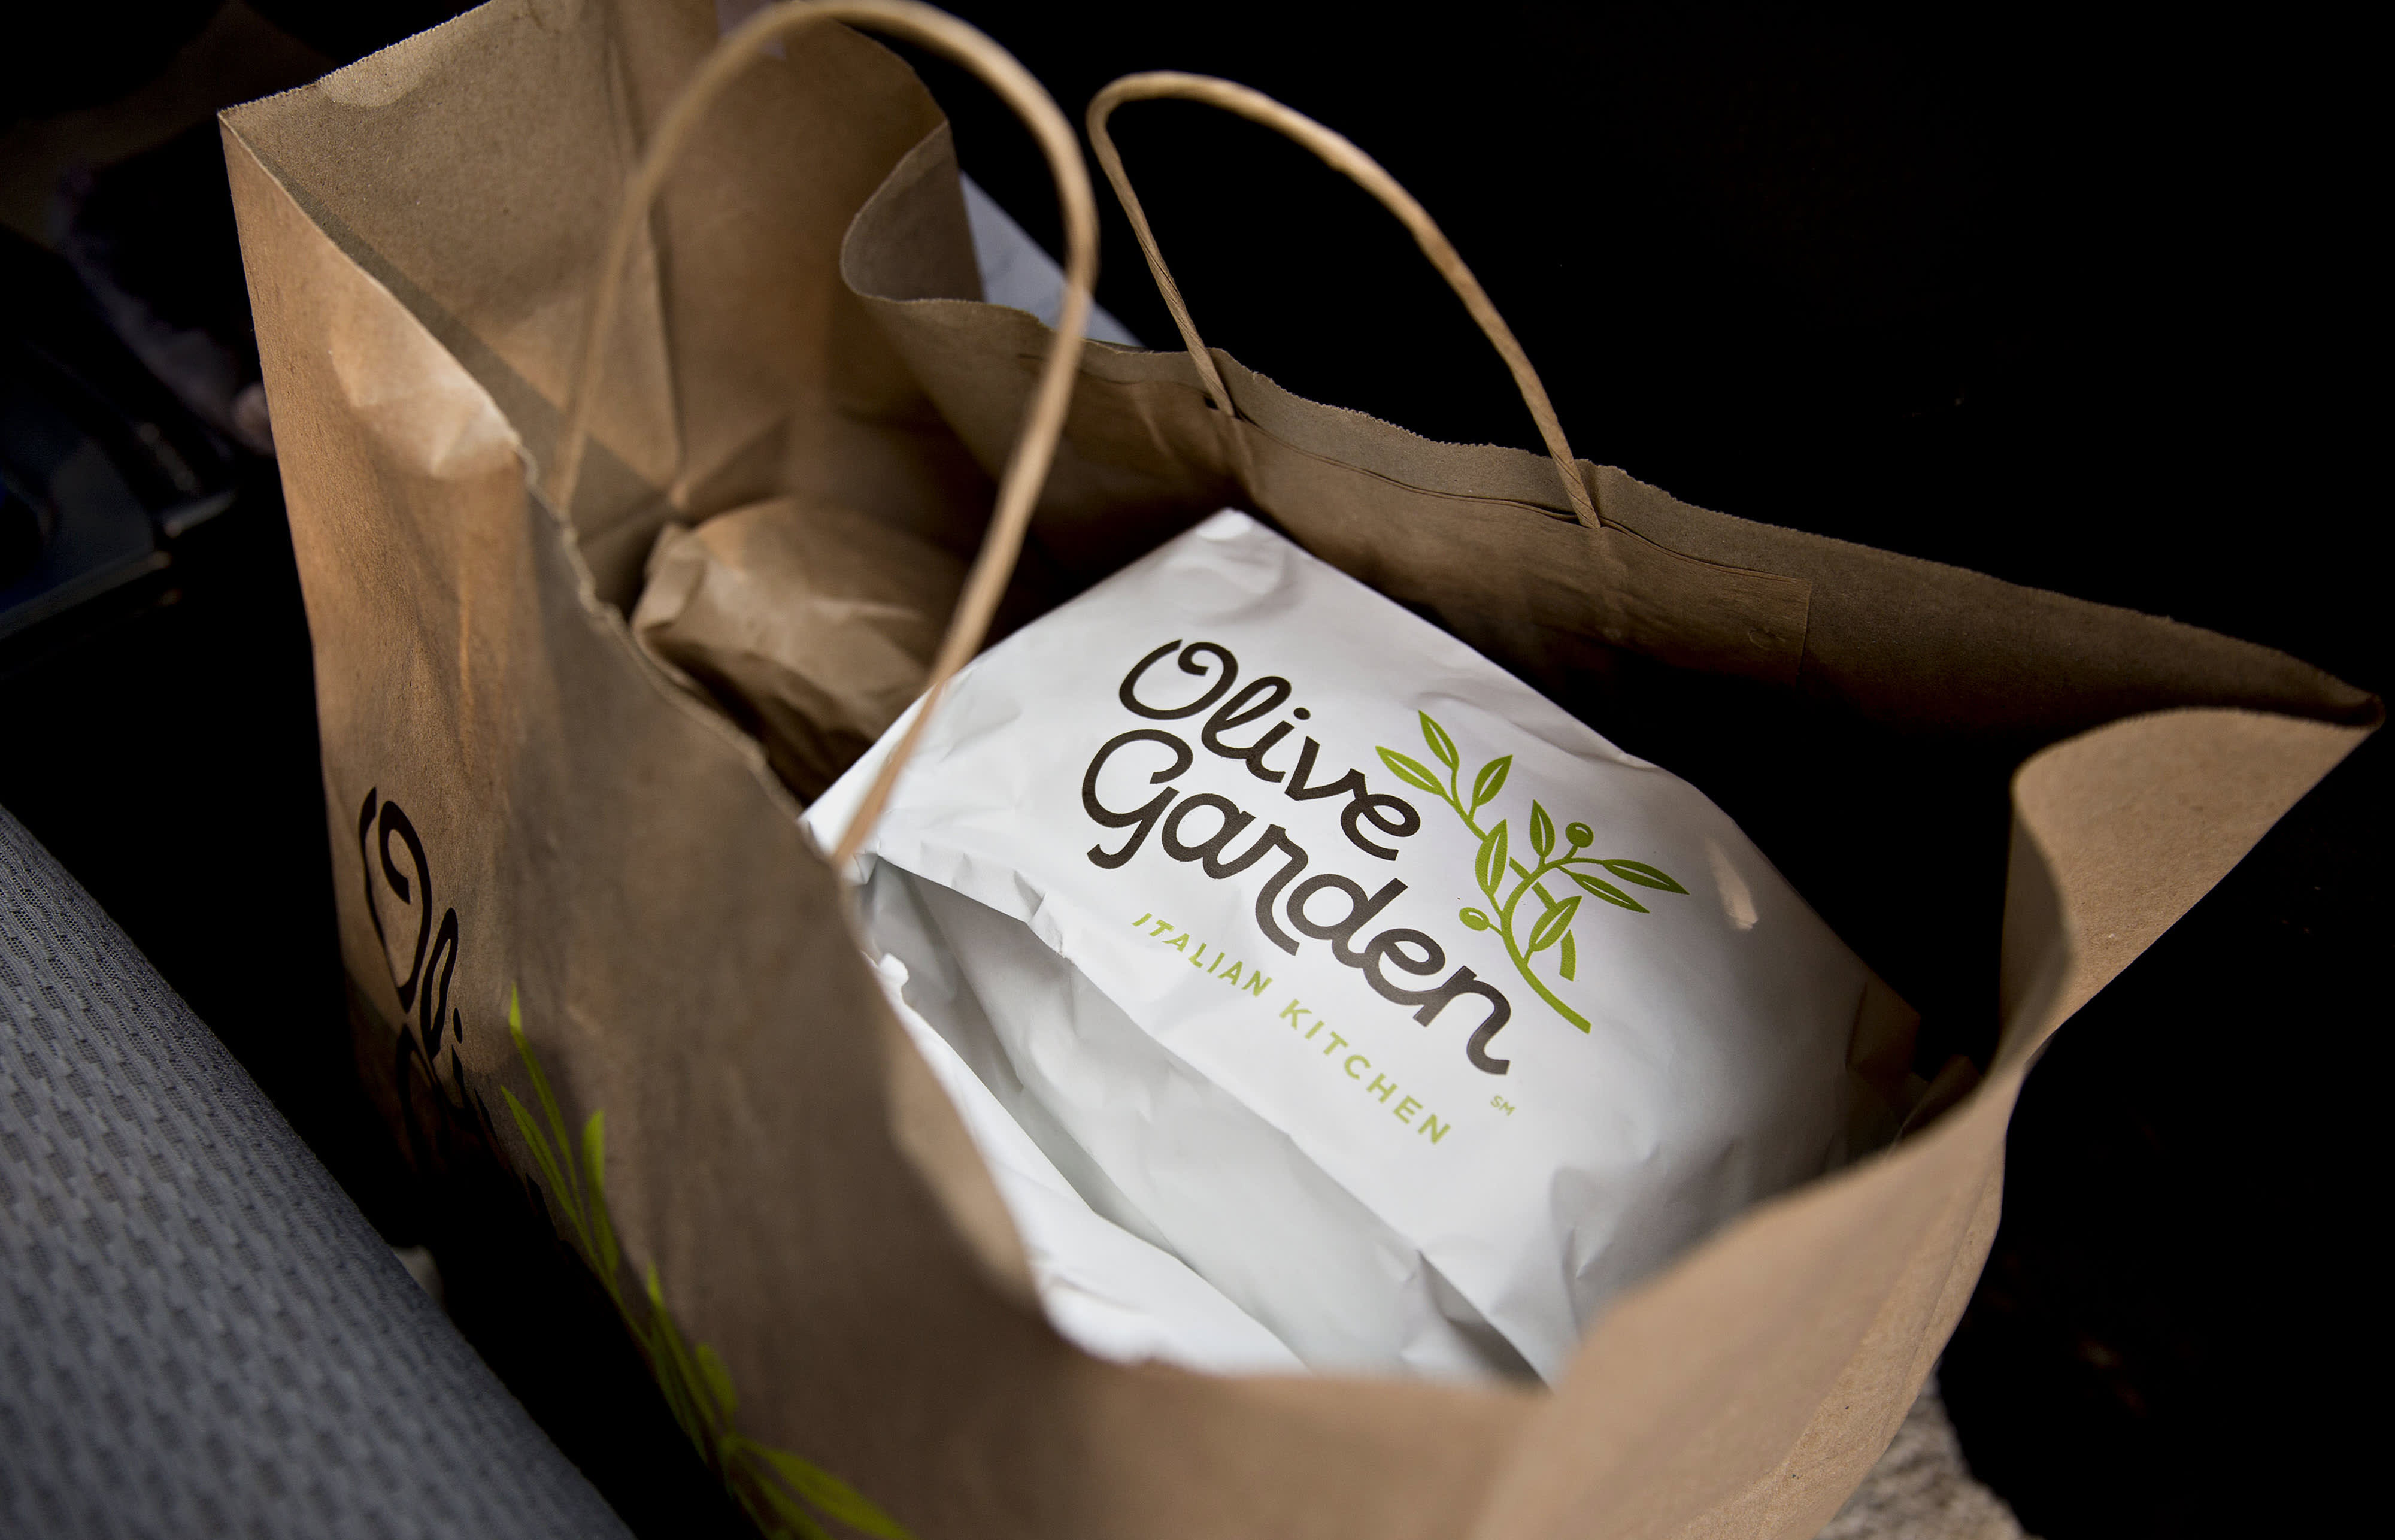 Shares Of Olive Garden Parent Darden Jump After Earnings Revenue Beat